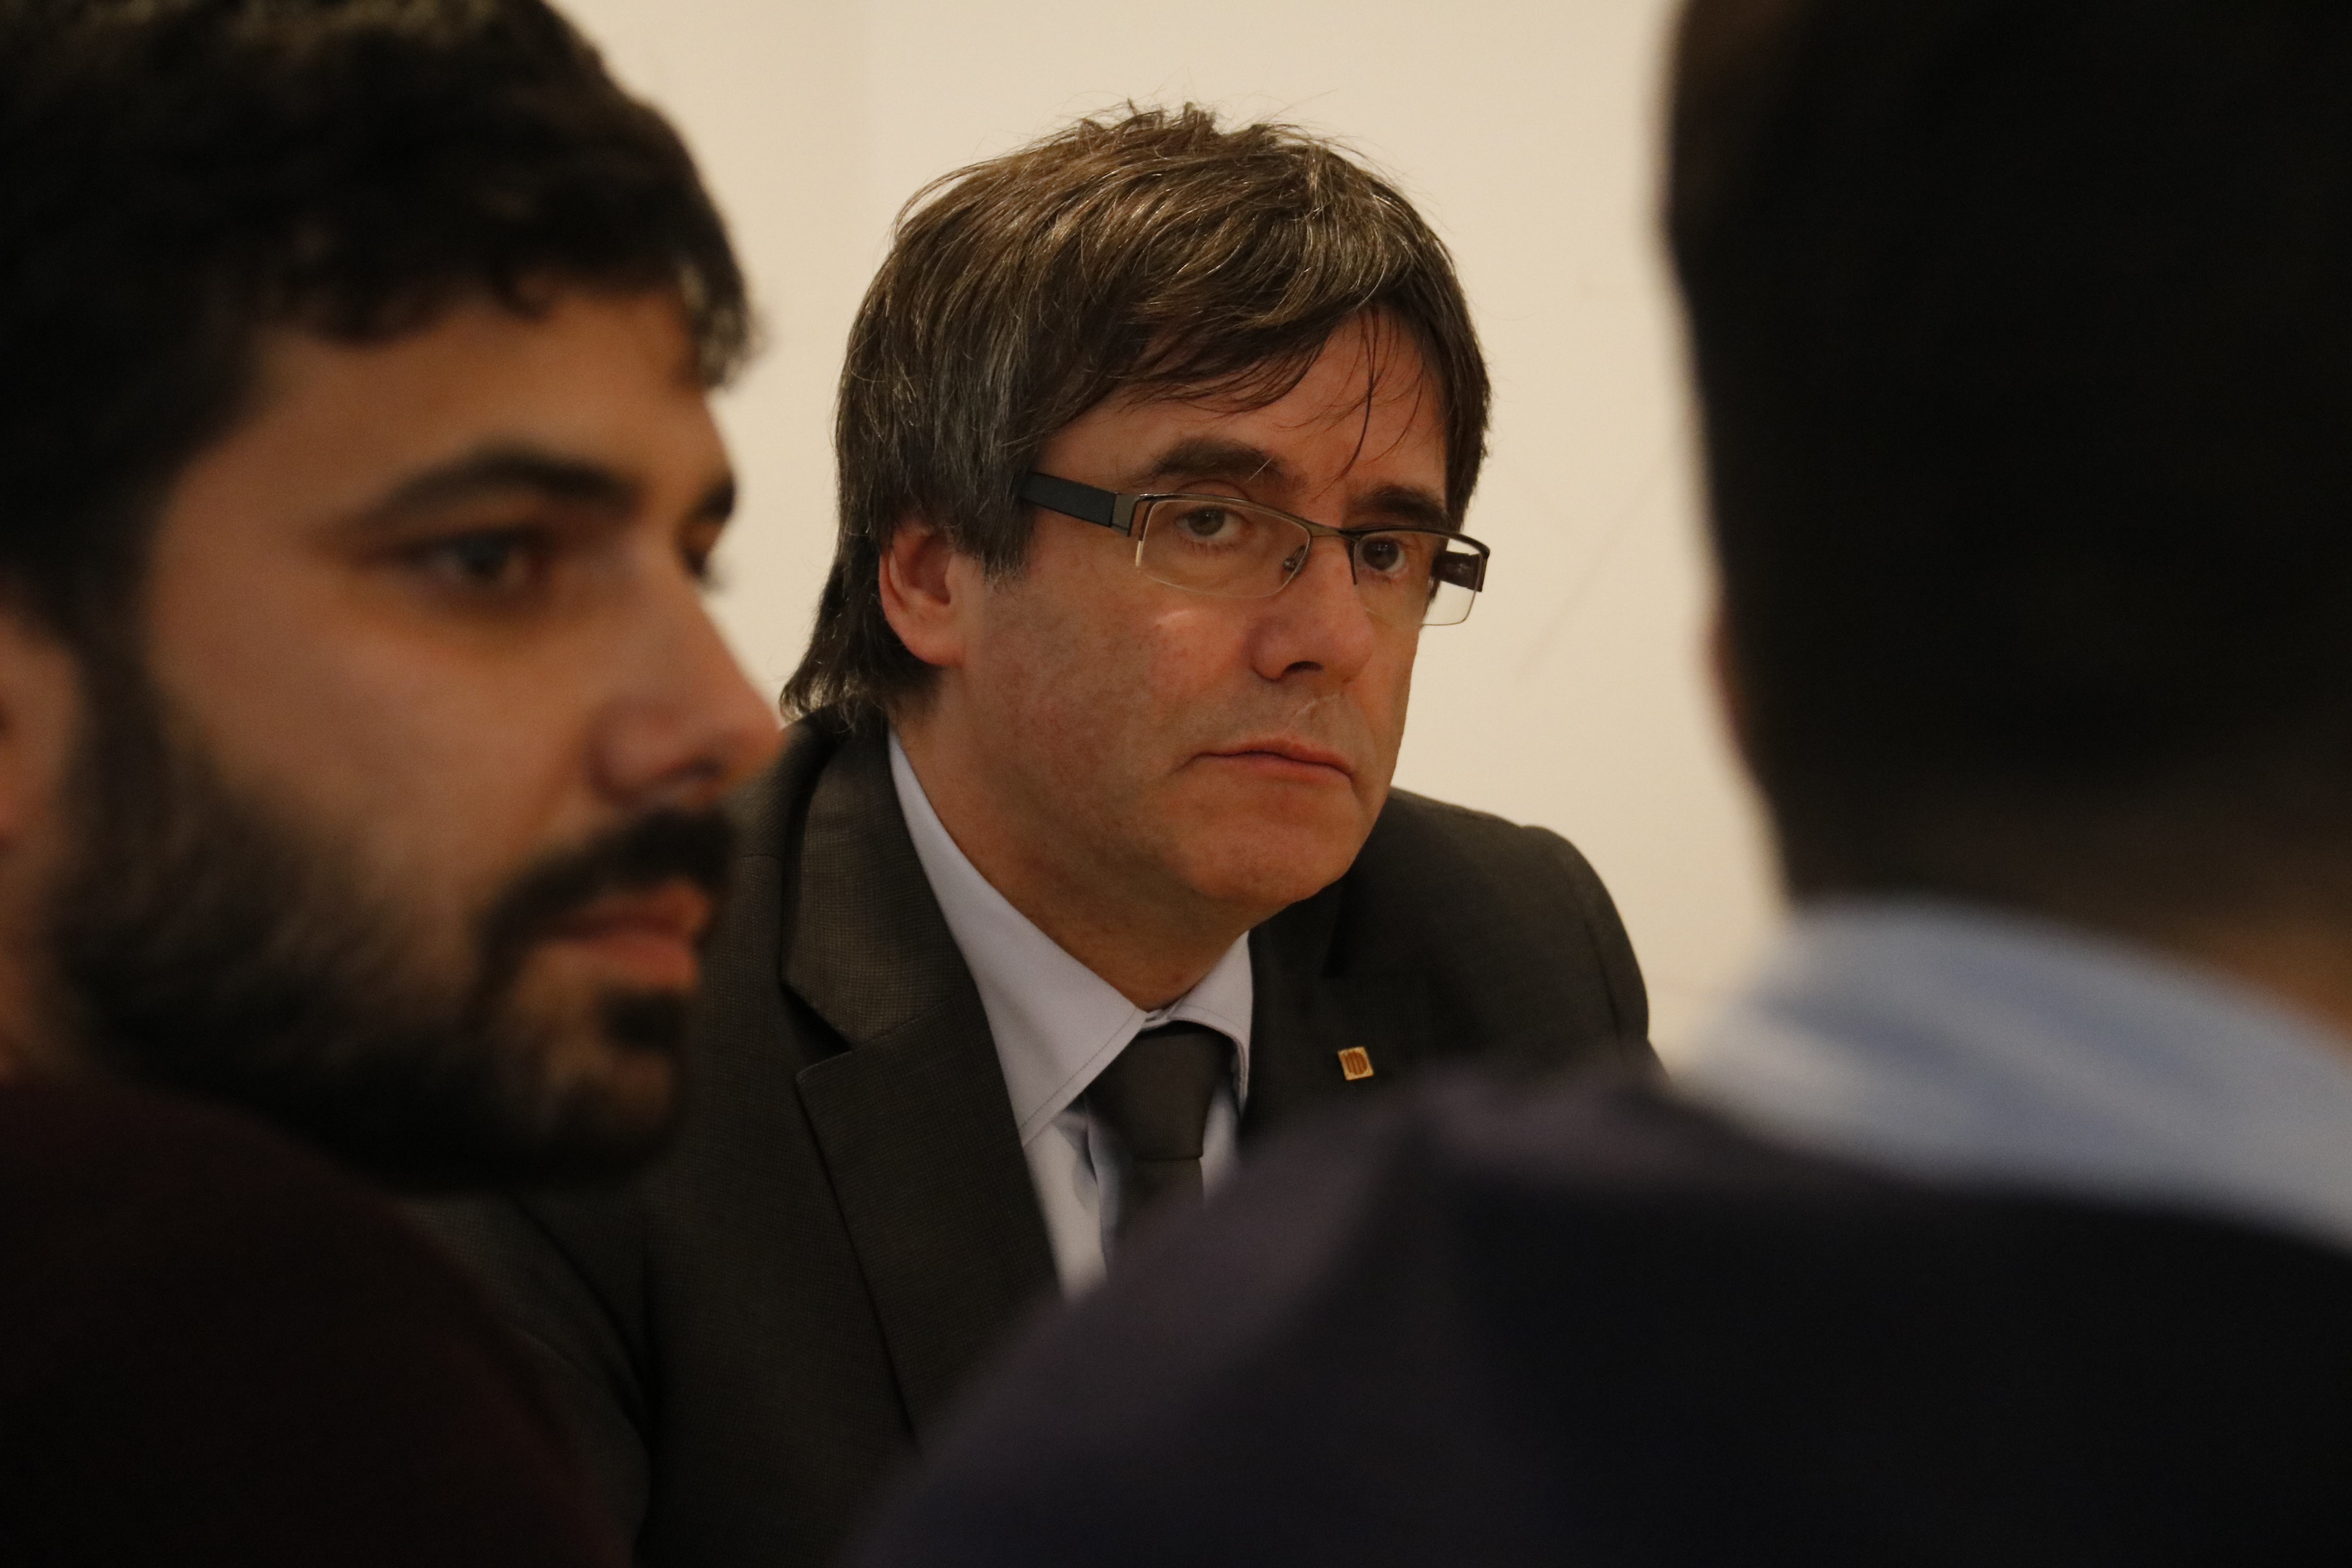 Carles Puigdemont (center) during a meeting with members of pacifist platform 'En Peu de Pau' held in Brussels on Wednesday (by Alan Ruiz Terol)